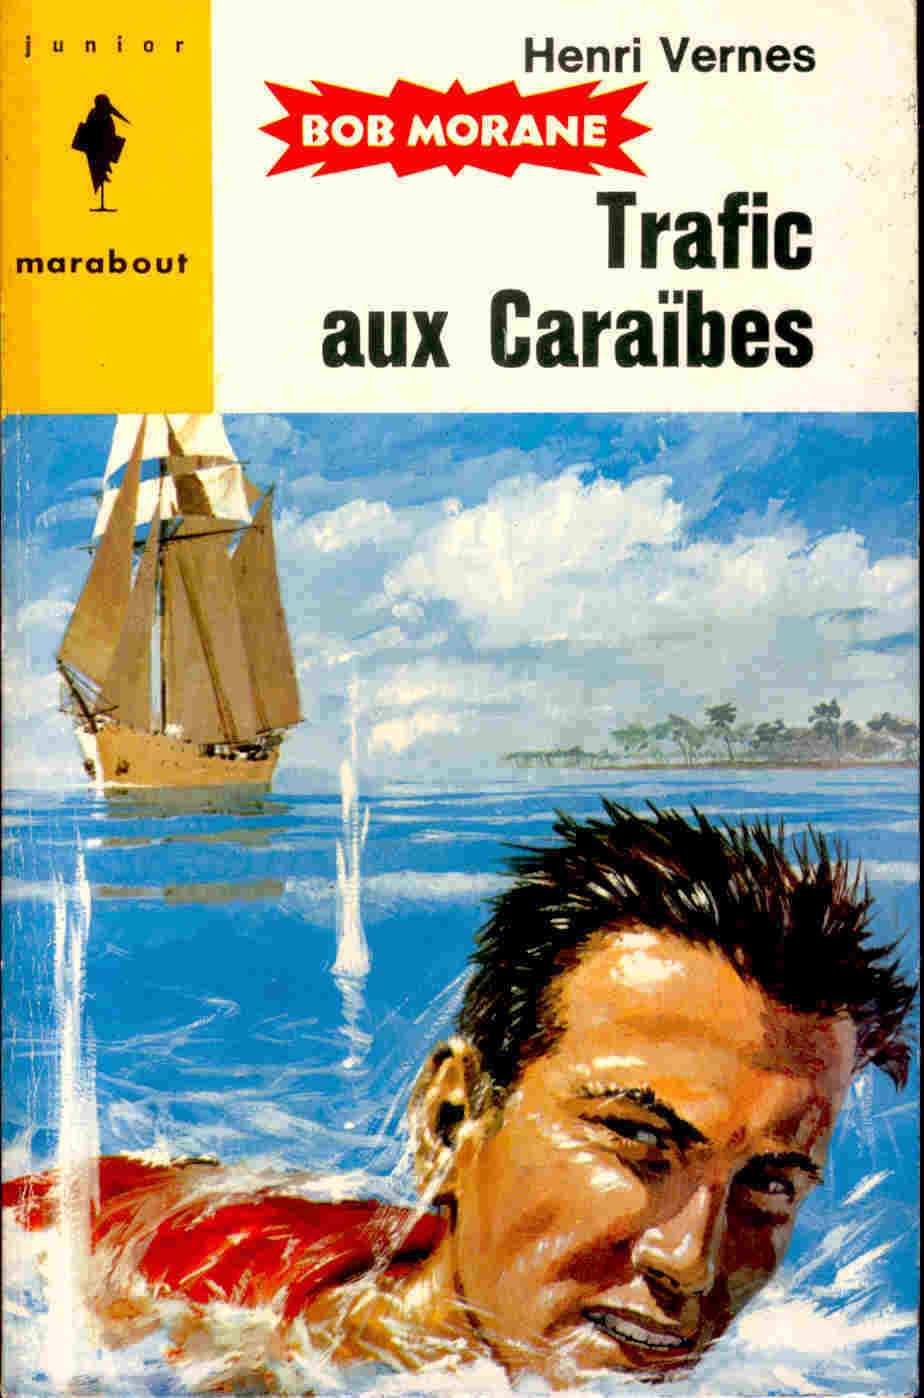 Bob Morane 206 - Trafic Aux Caraïbes - Henri Vernes - Marabout Junior